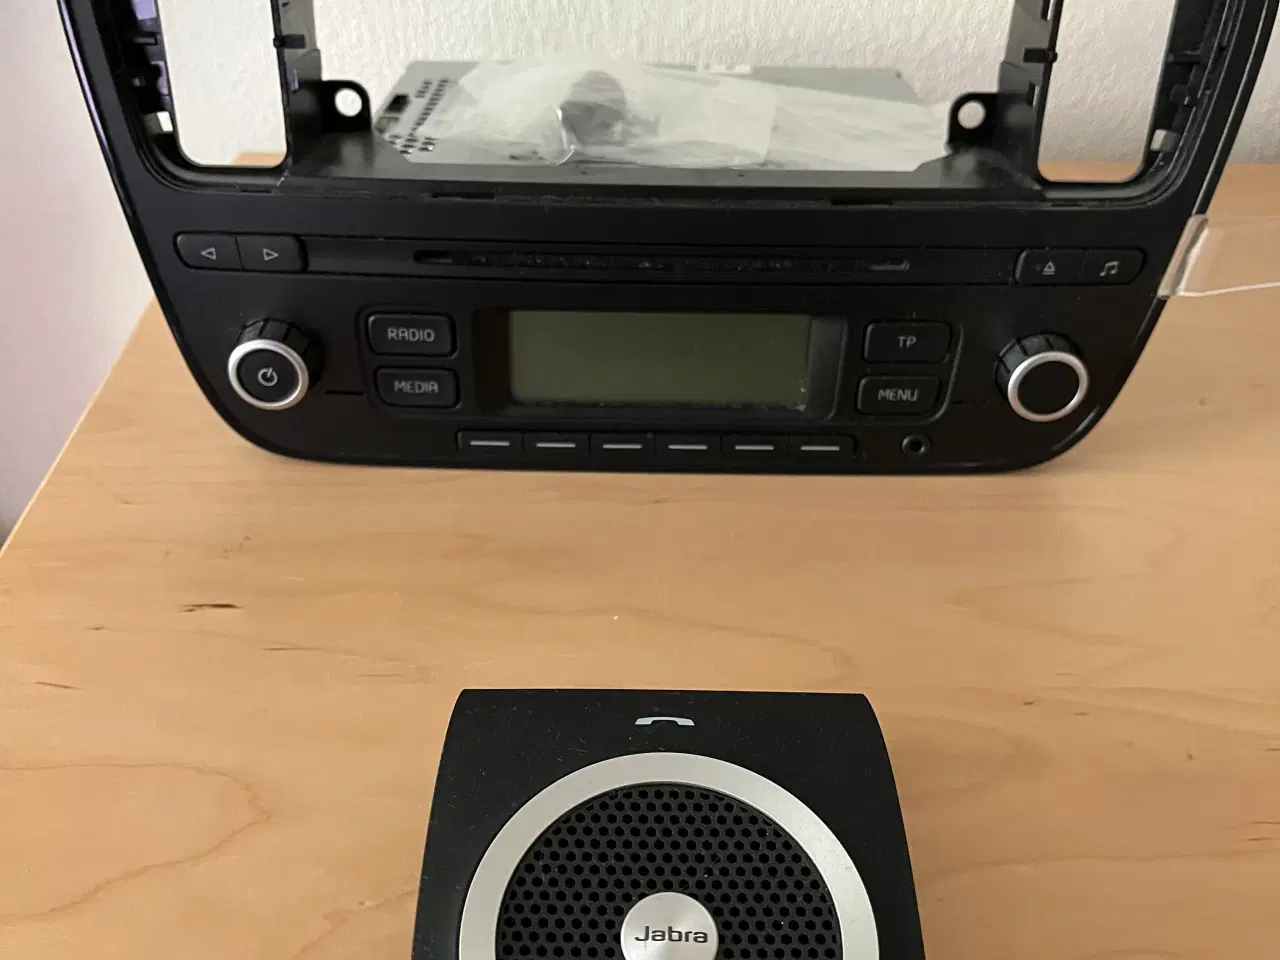 Billede 1 - Radio til Skoda Citigo med Jabra Bluetooth 